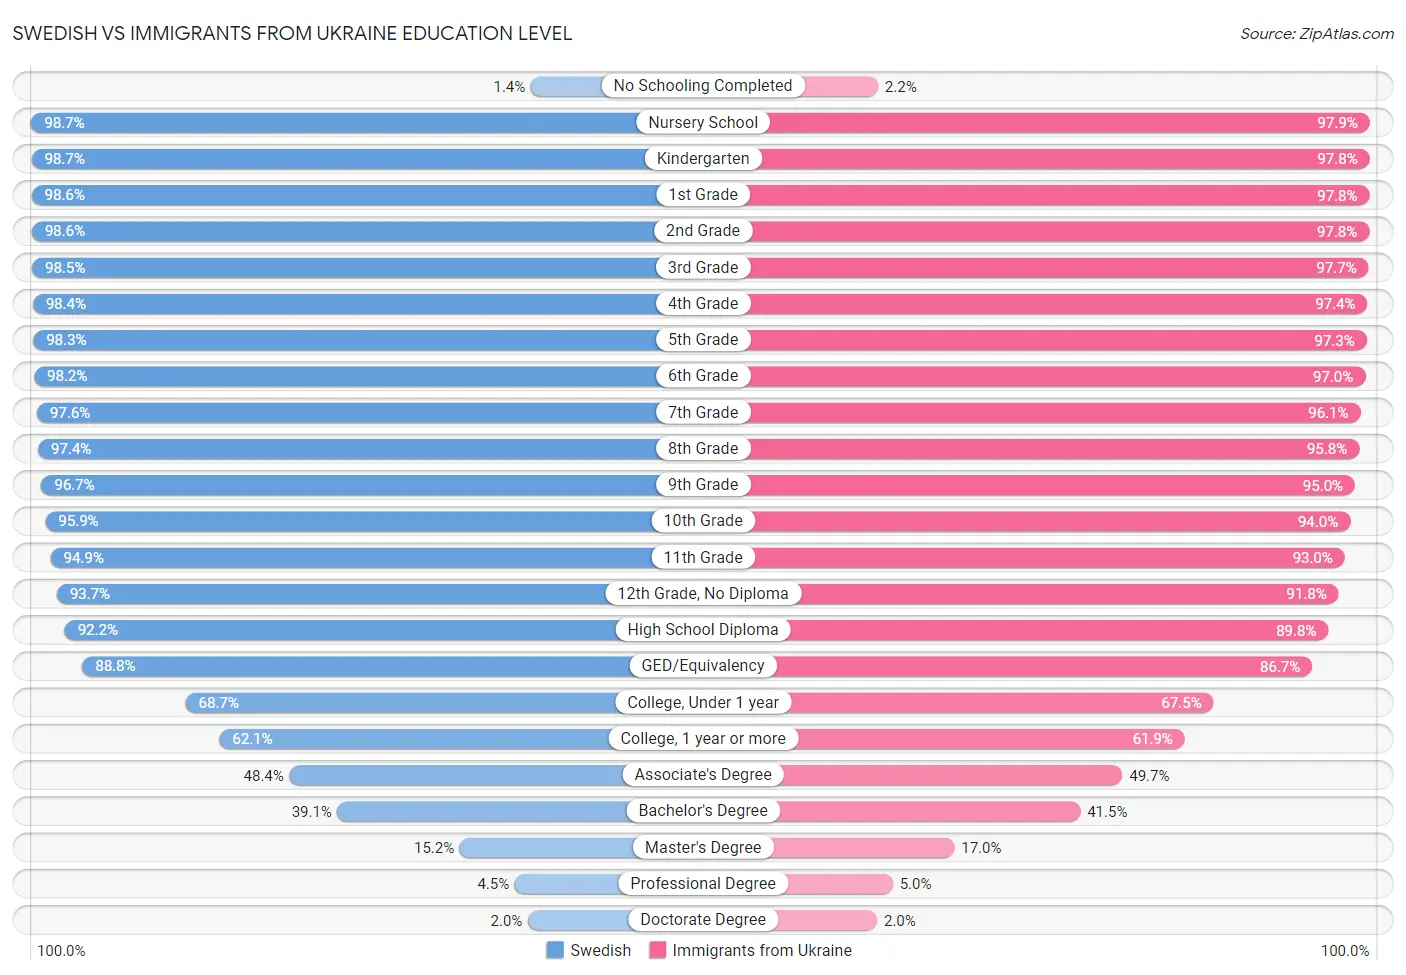 Swedish vs Immigrants from Ukraine Education Level